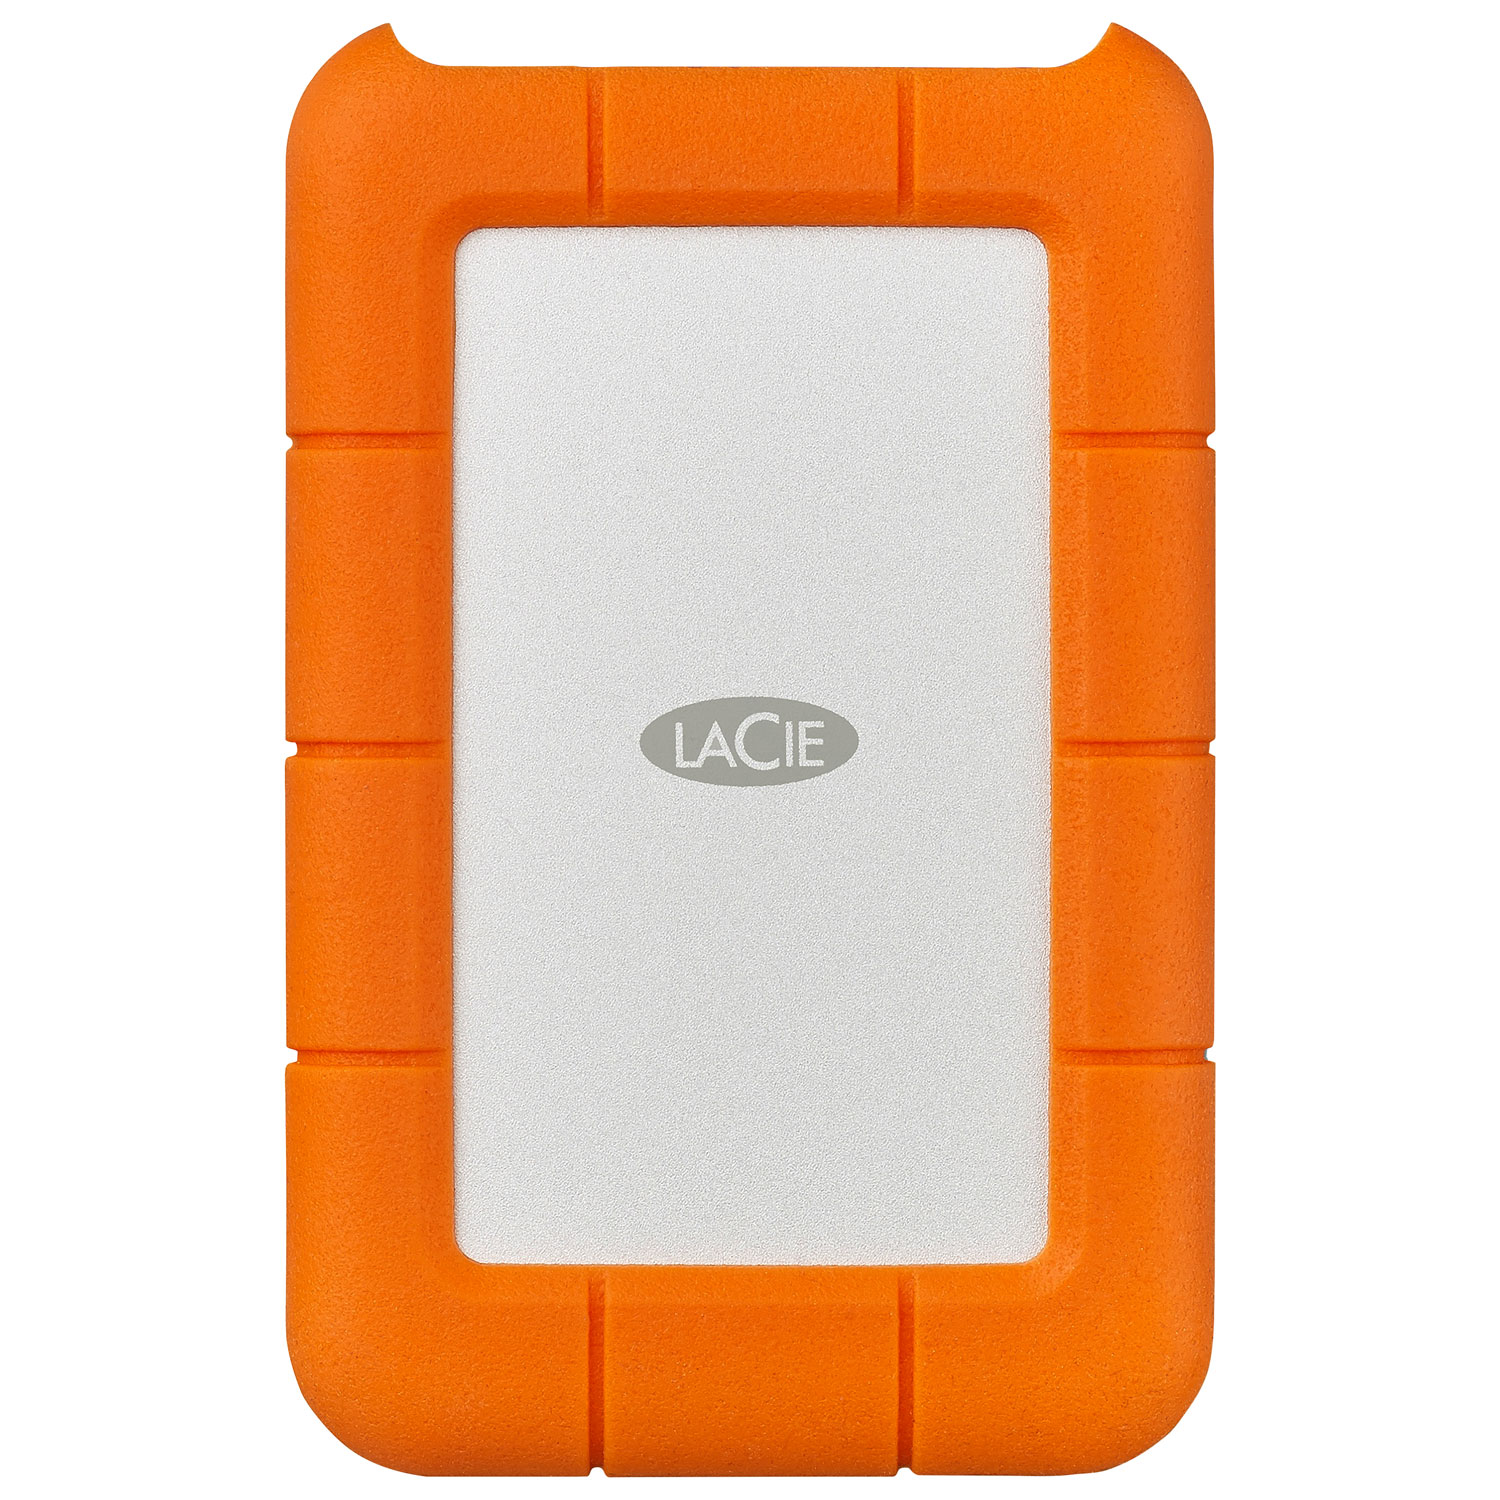 LaCie Rugged 2TB USB-C Portable External Hard Drive for PC/Mac (STFR2000800) - Orange